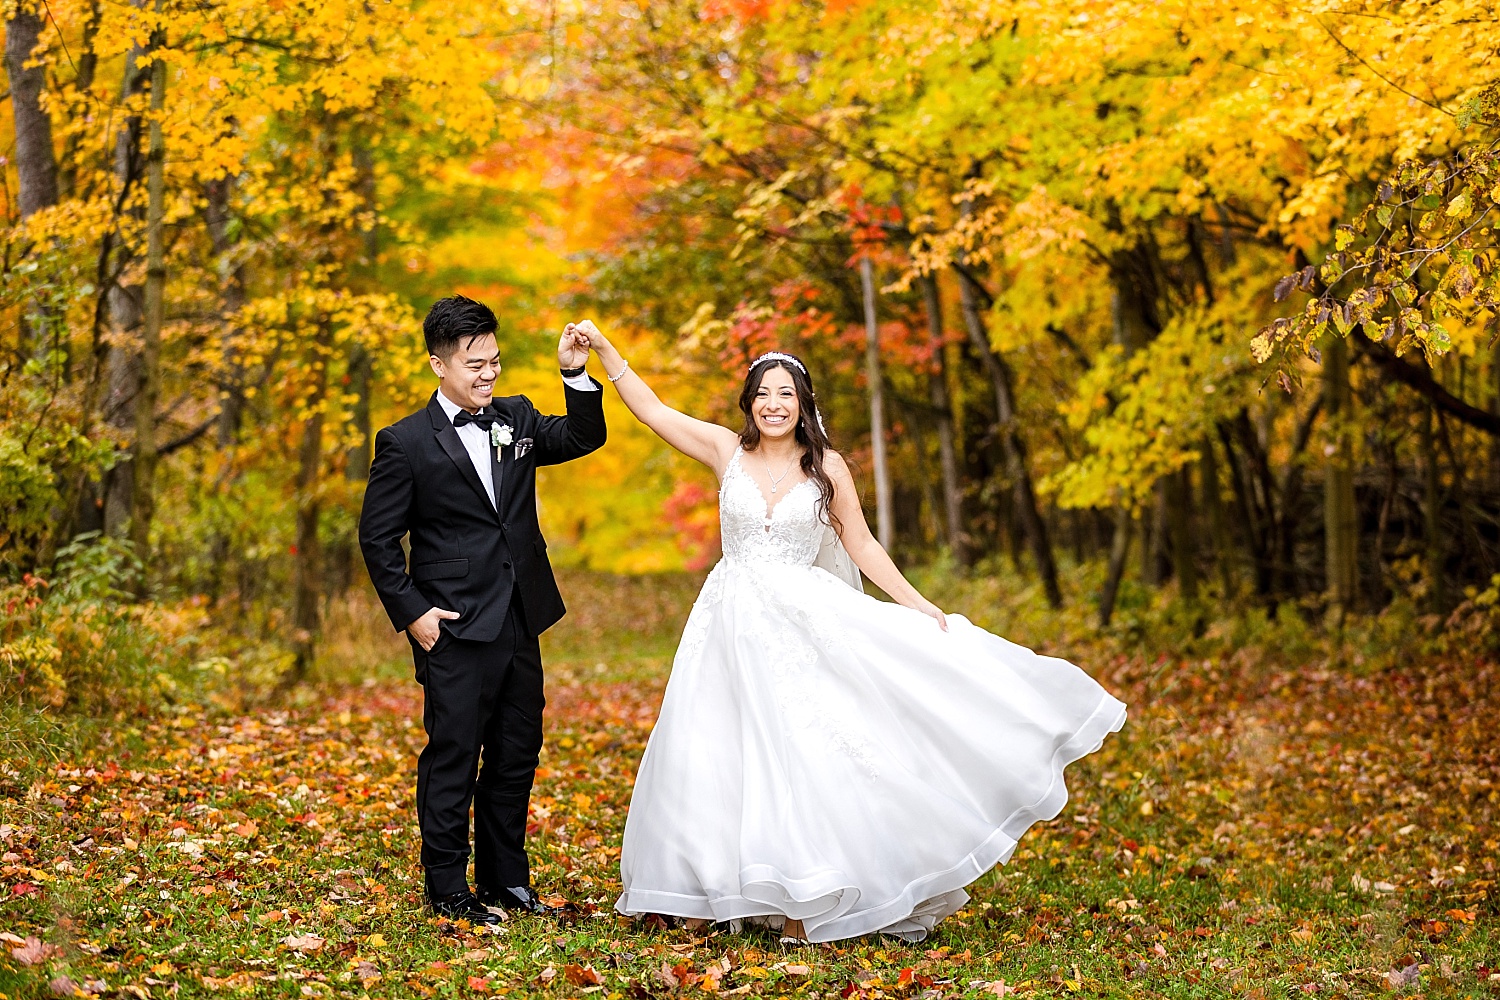 Rainy fall Wedding photographs at Northfork Estate in Eaton Rapids, Michigan